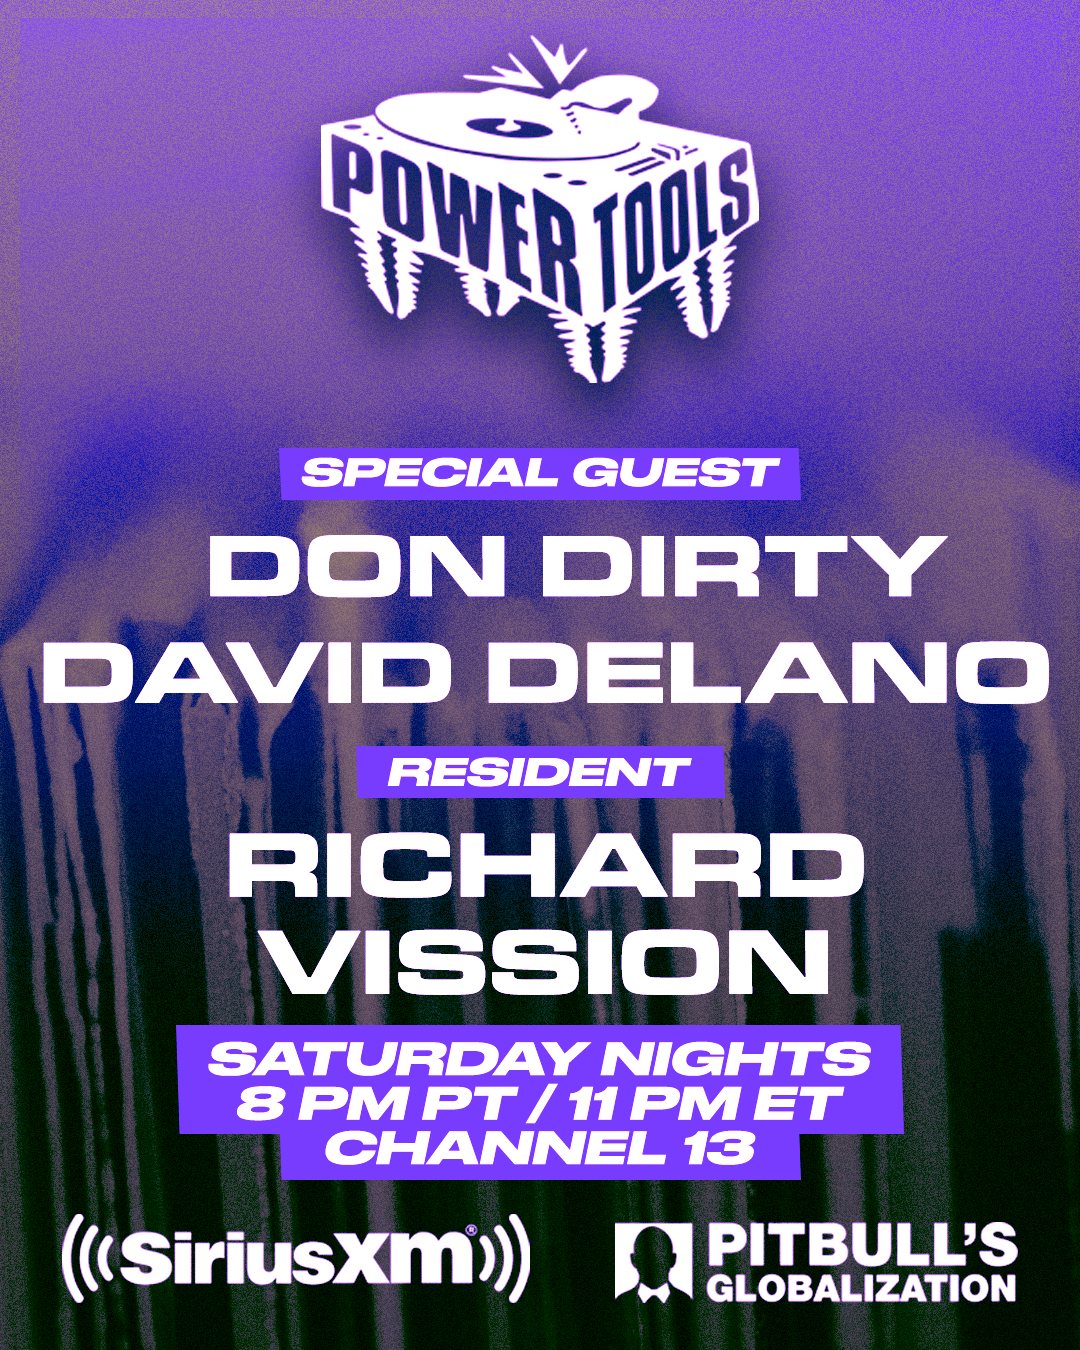 Episode 37: Powertools ft: Don Dirty and David Delano